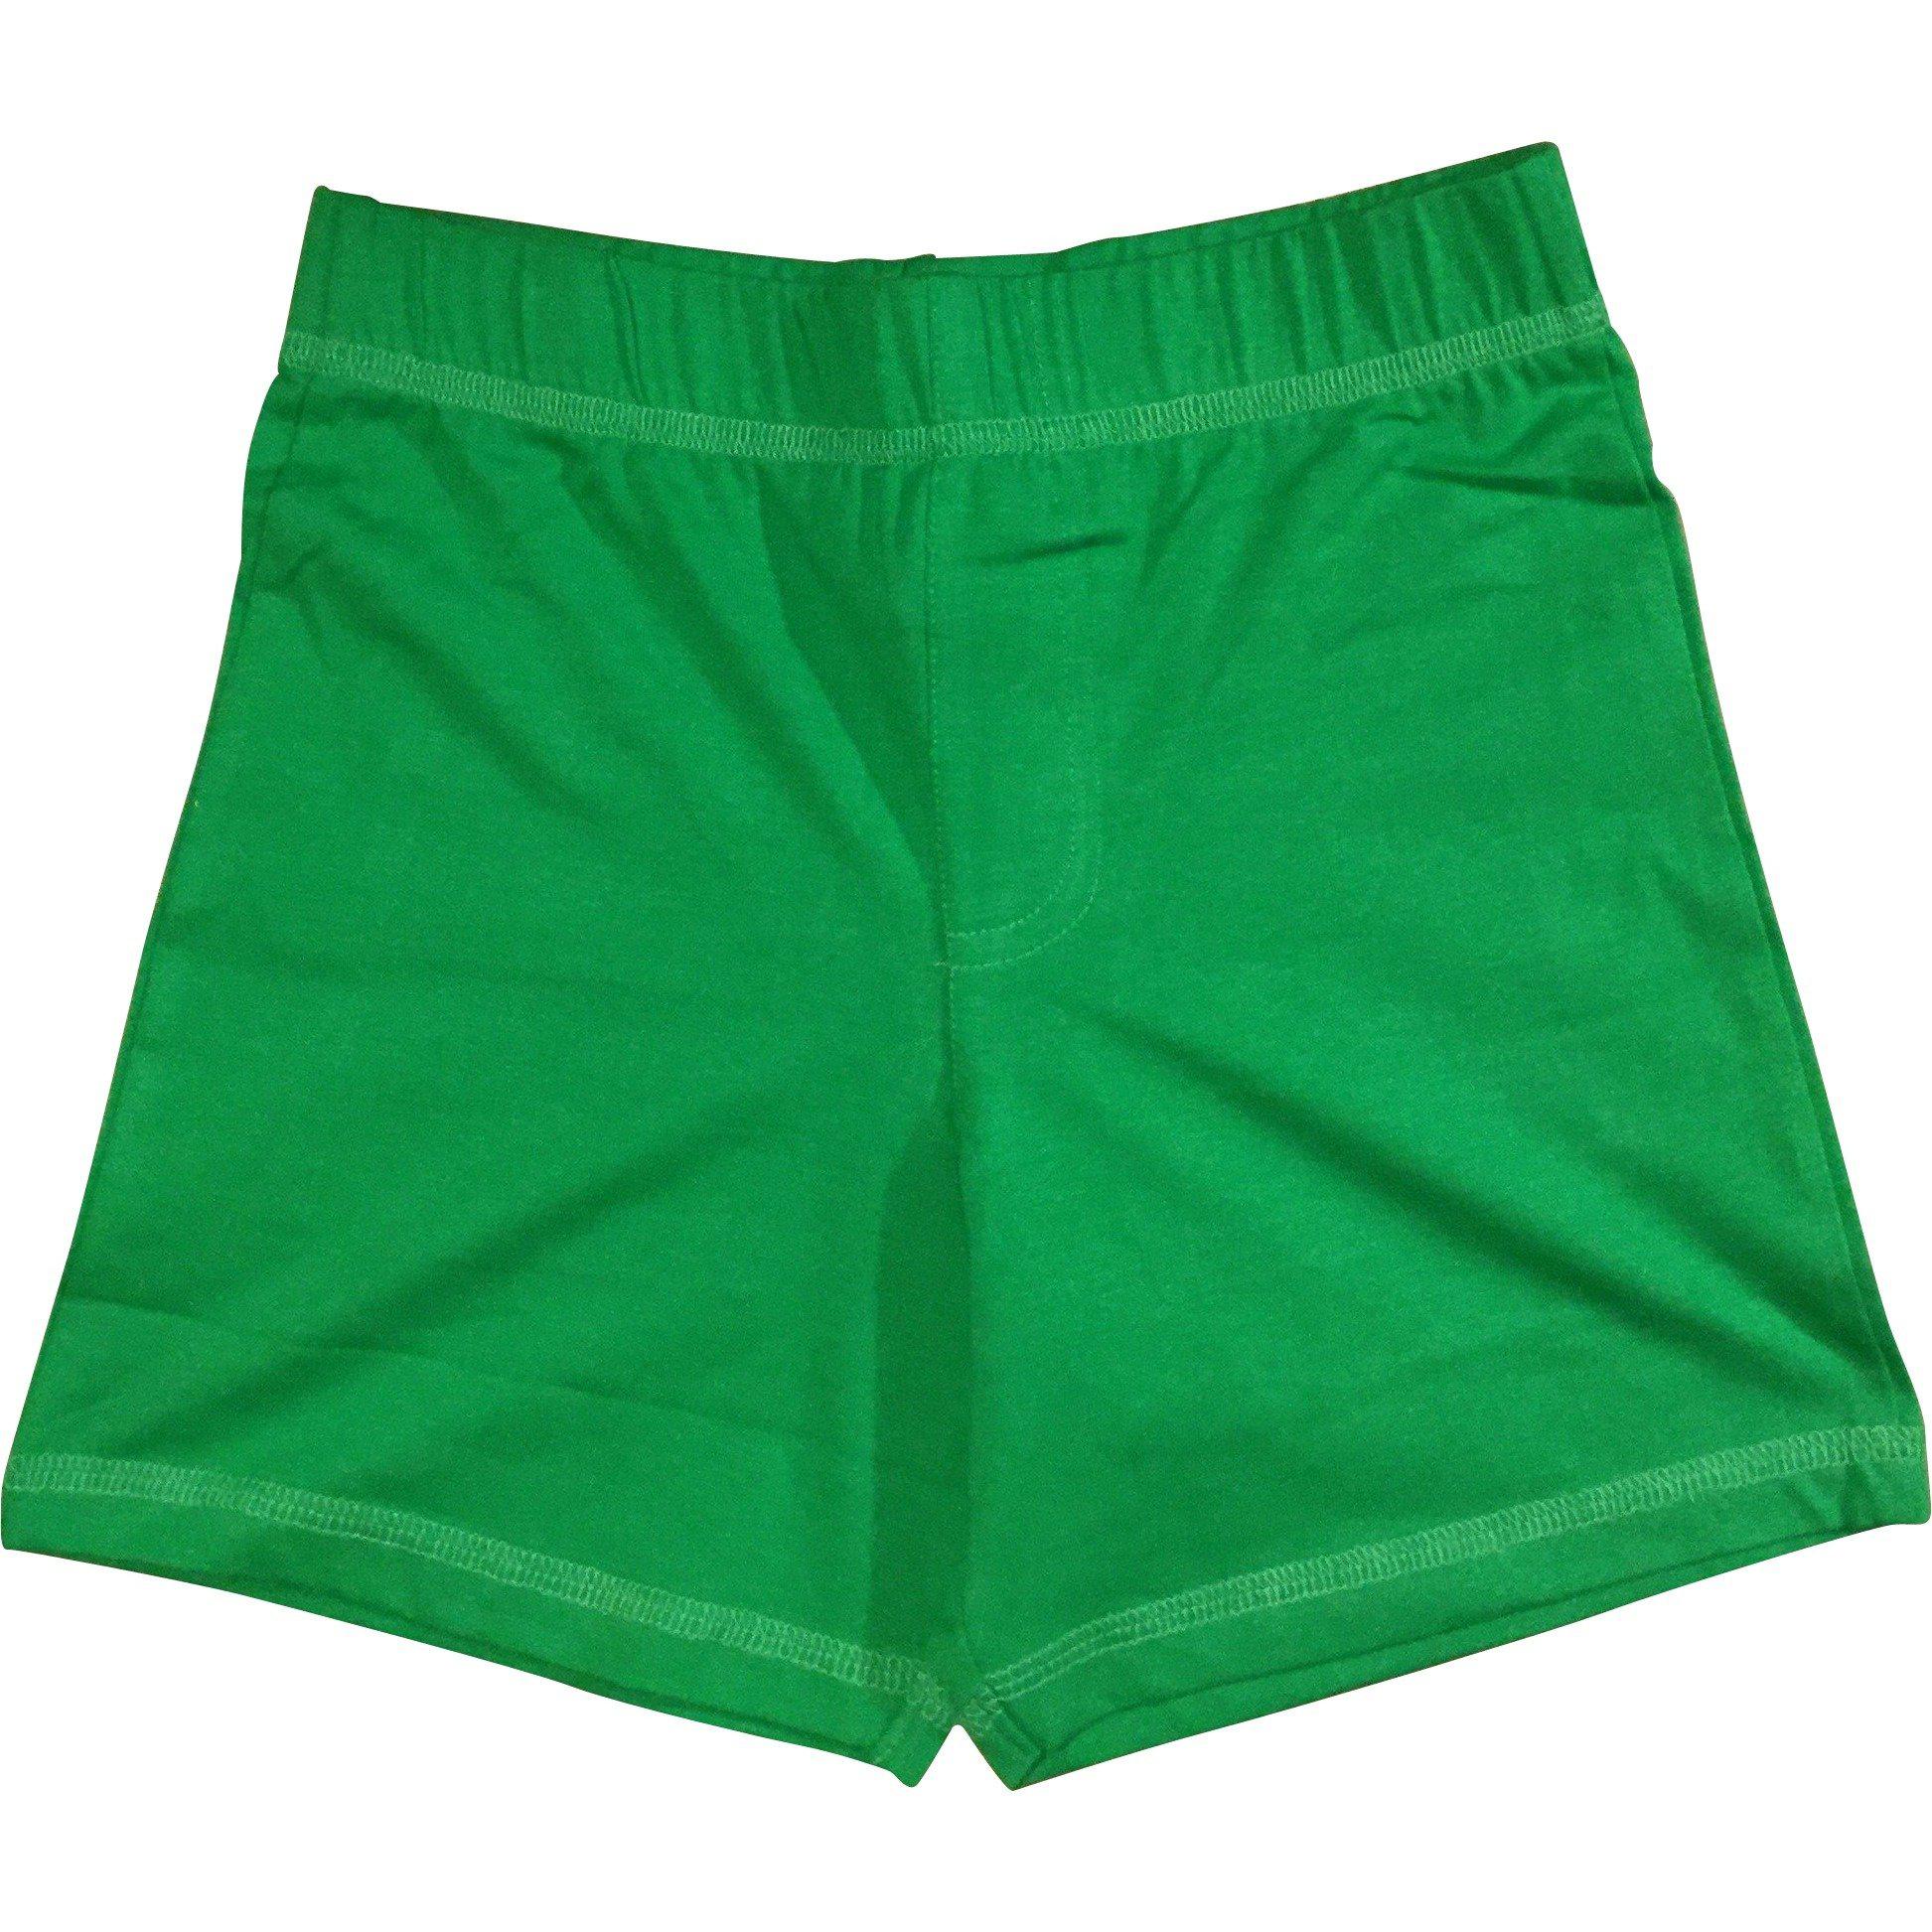 More than a Fling - Green Shorts